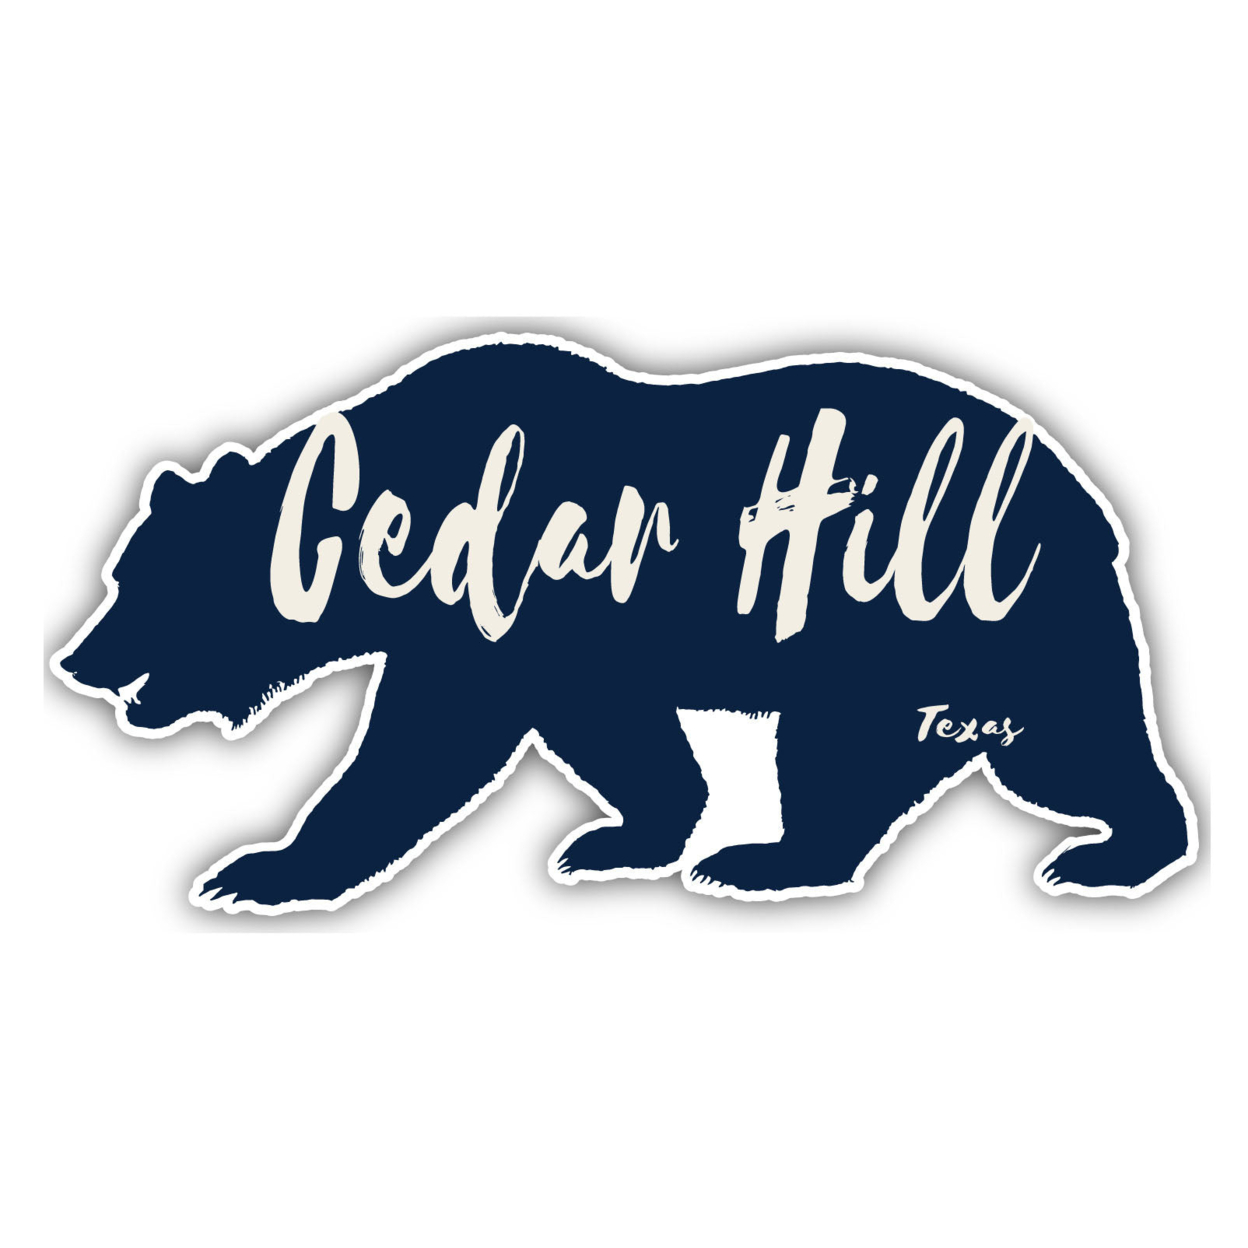 Cedar Hill Texas Souvenir Decorative Stickers (Choose Theme And Size) - Single Unit, 6-Inch, Bear